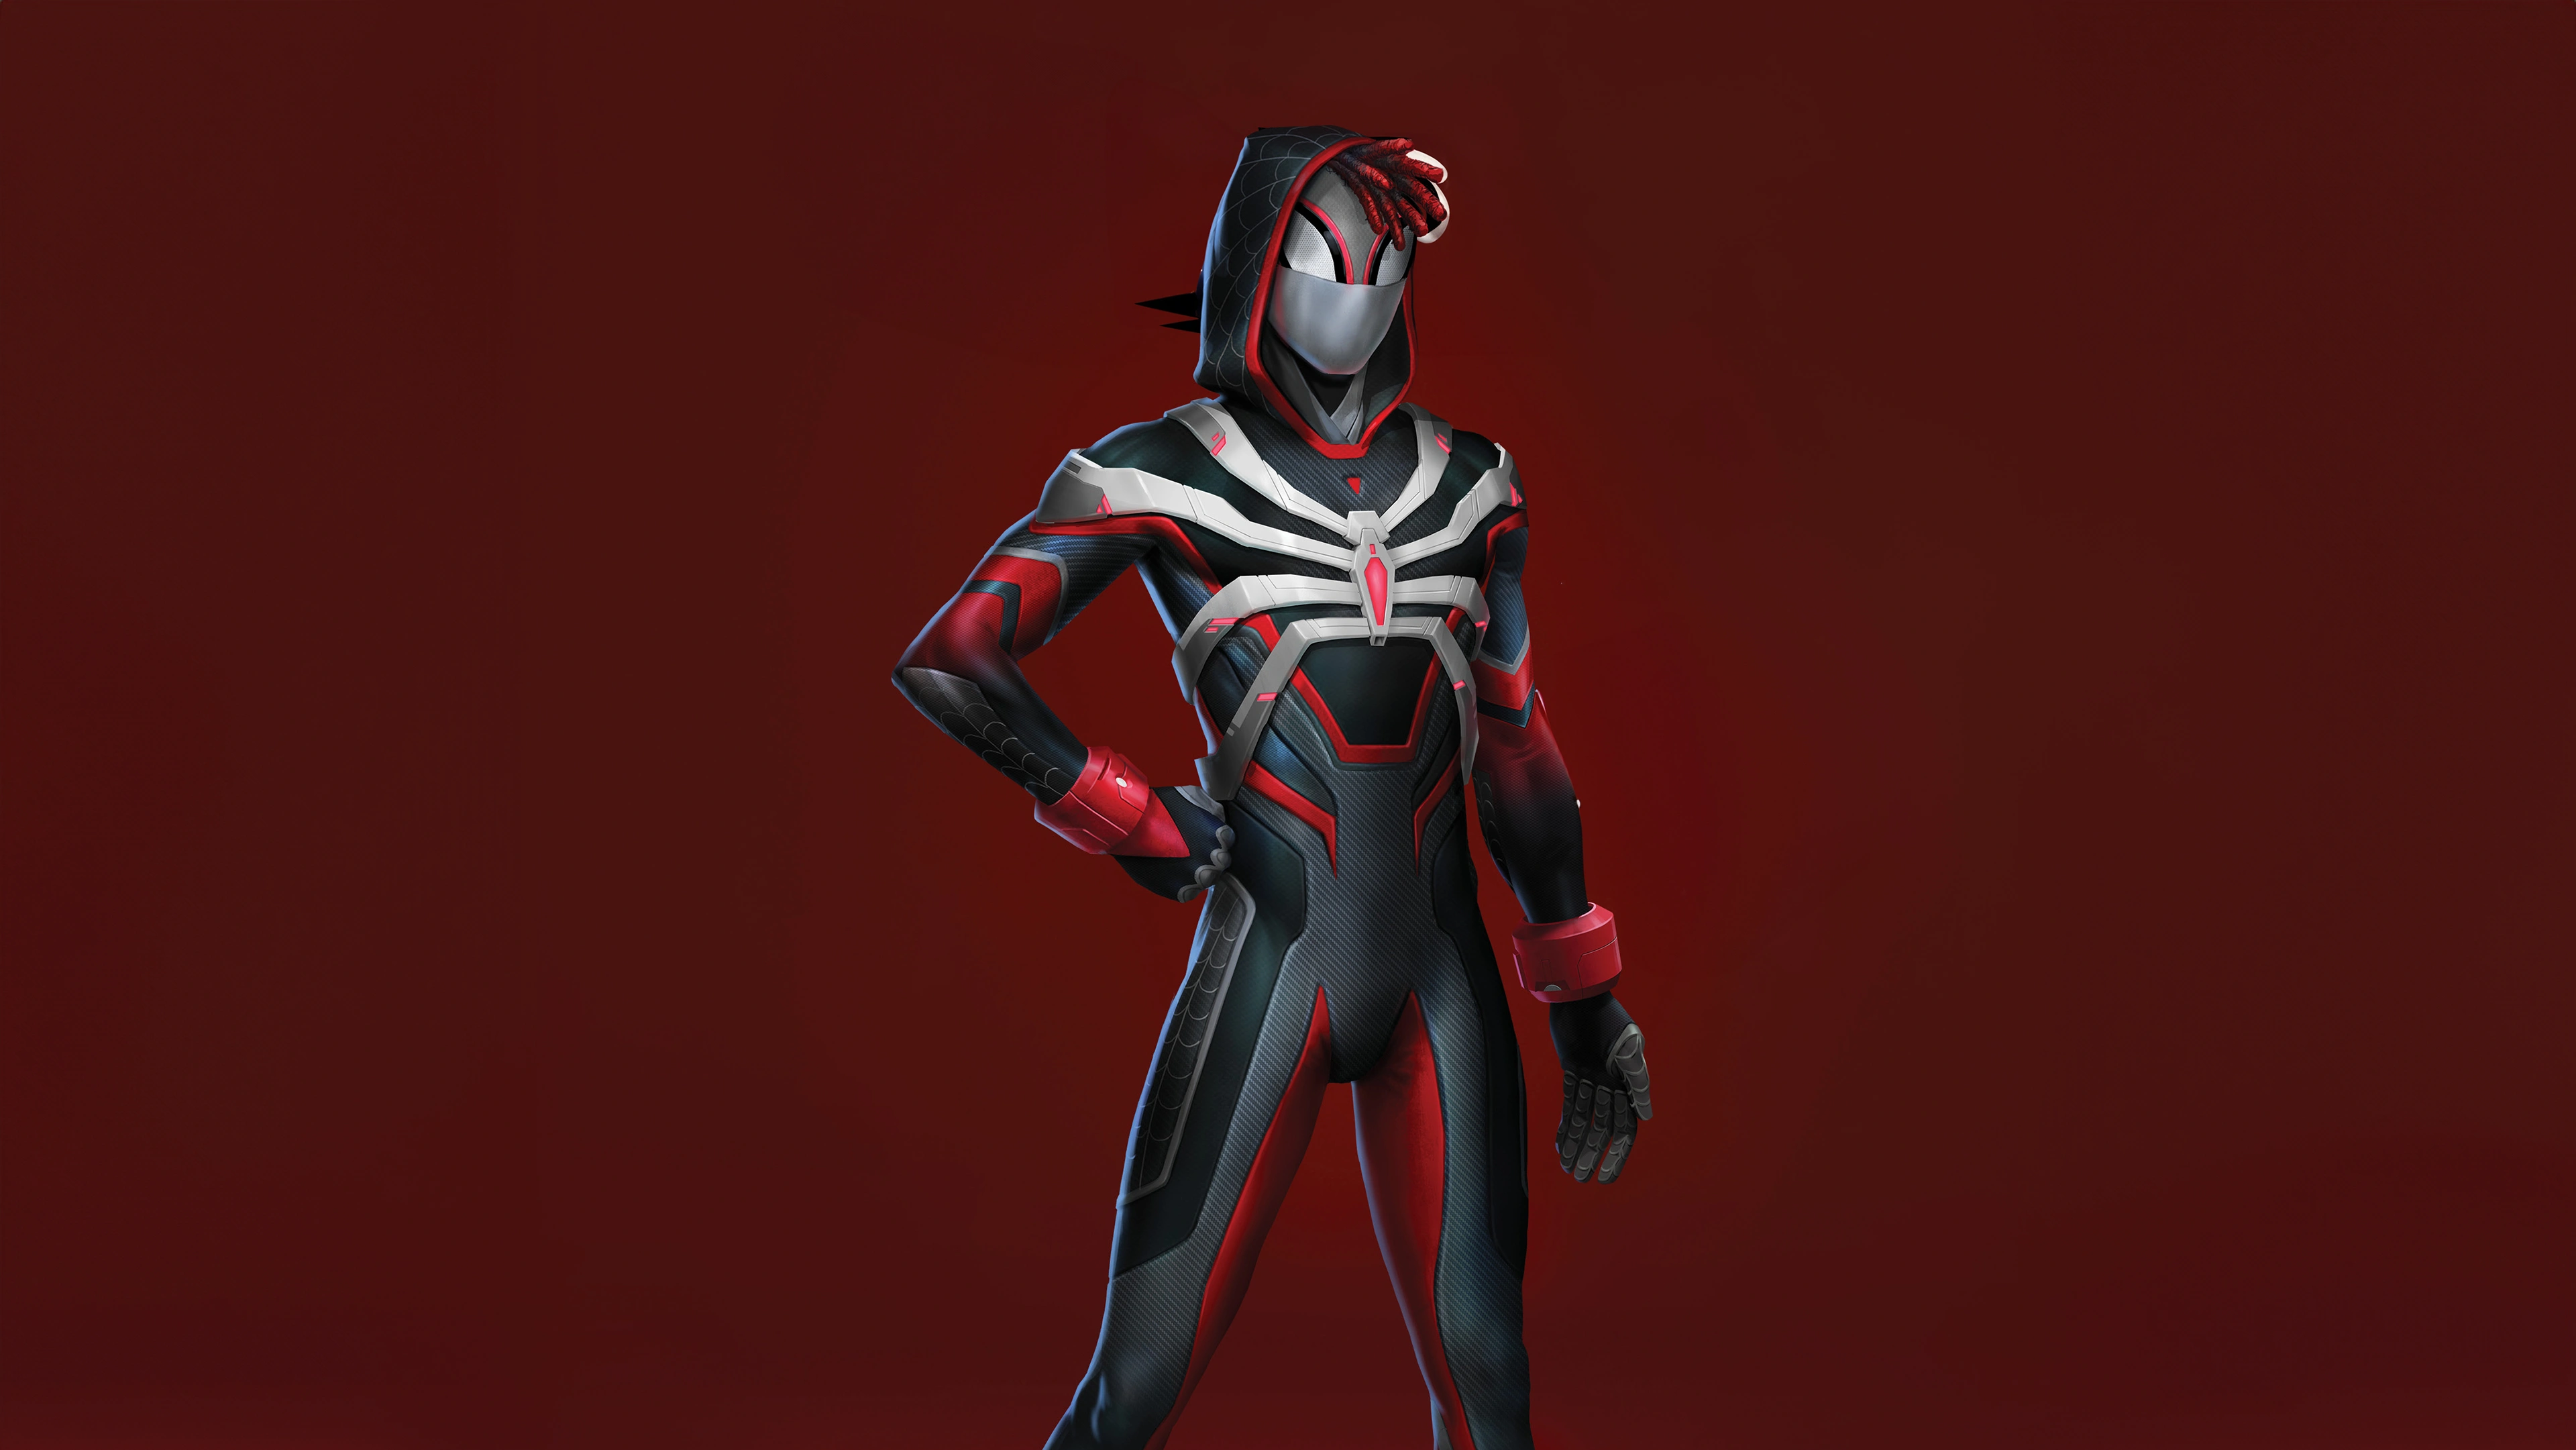 marvels spider man 2 red spectre suit 4k qm.jpg